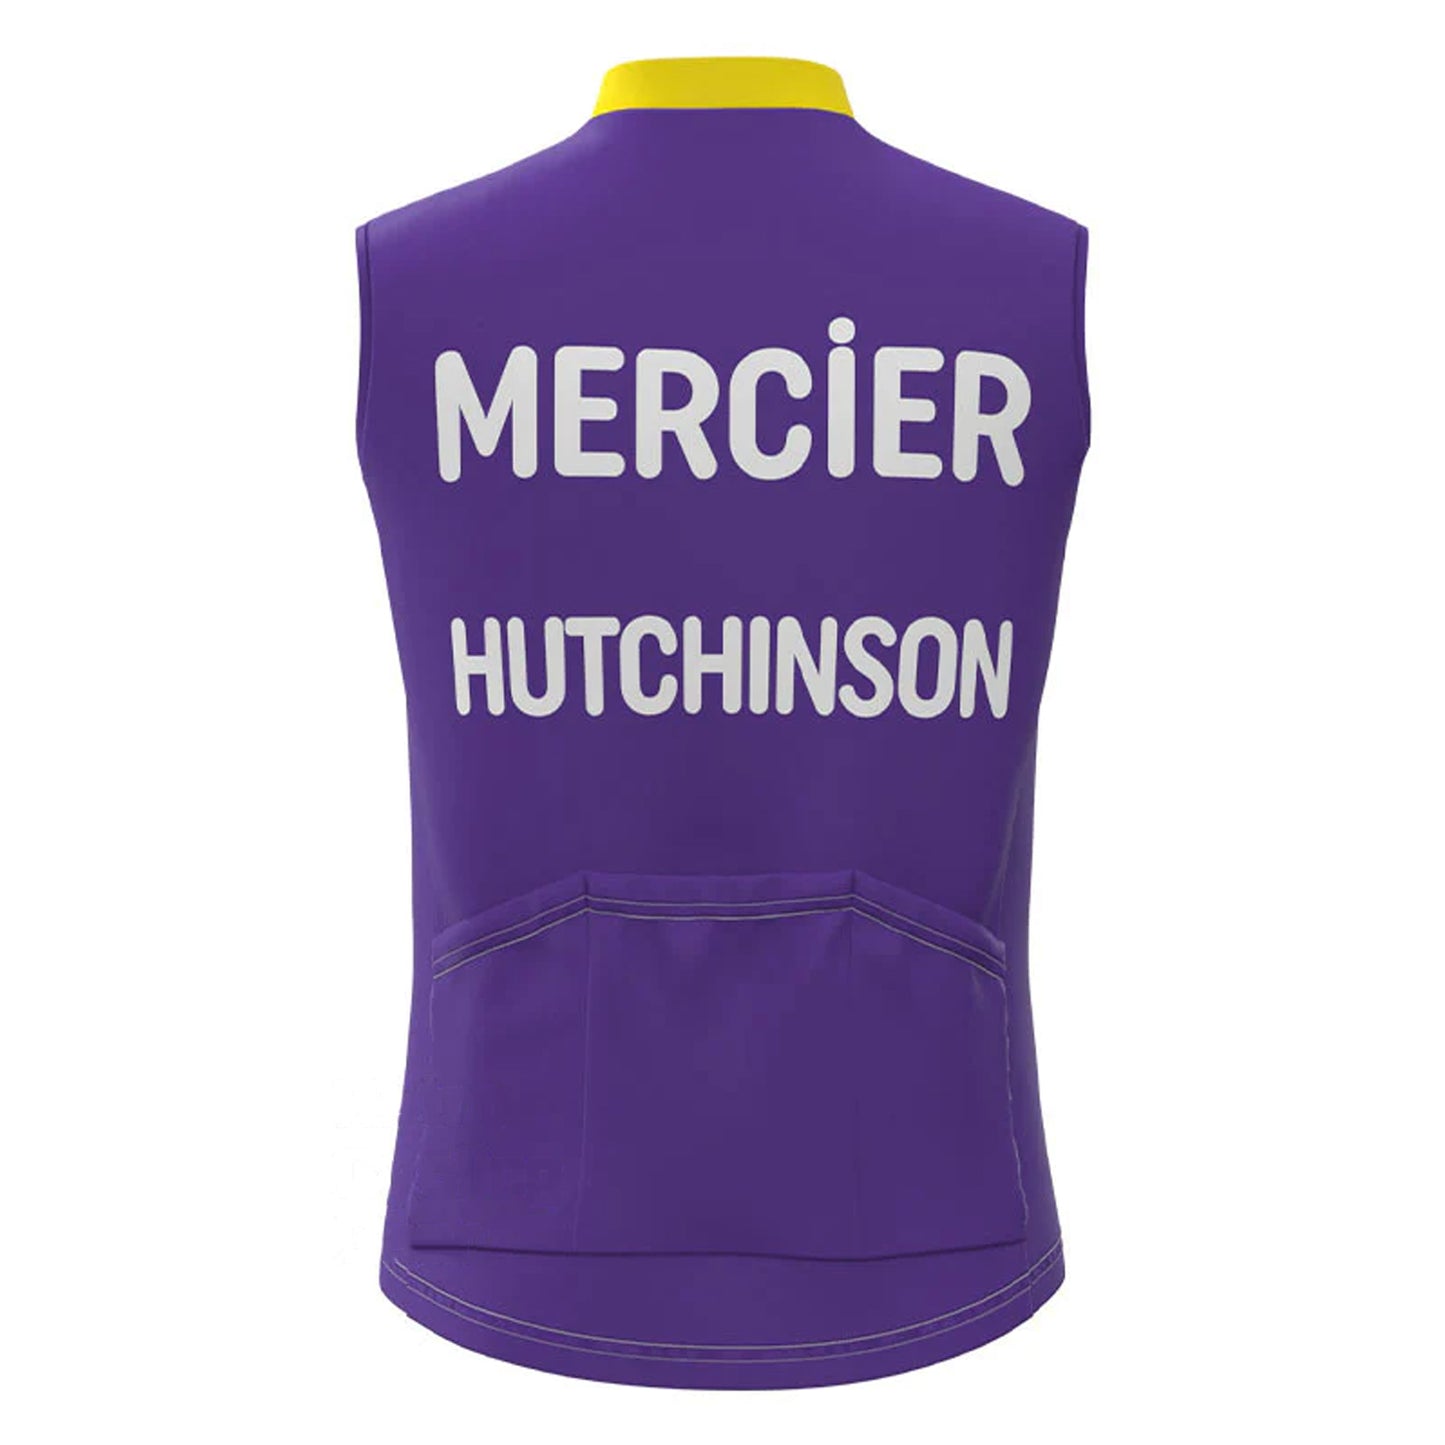 Mercier Hutchinson Purple Retro MTB Cycling Vest